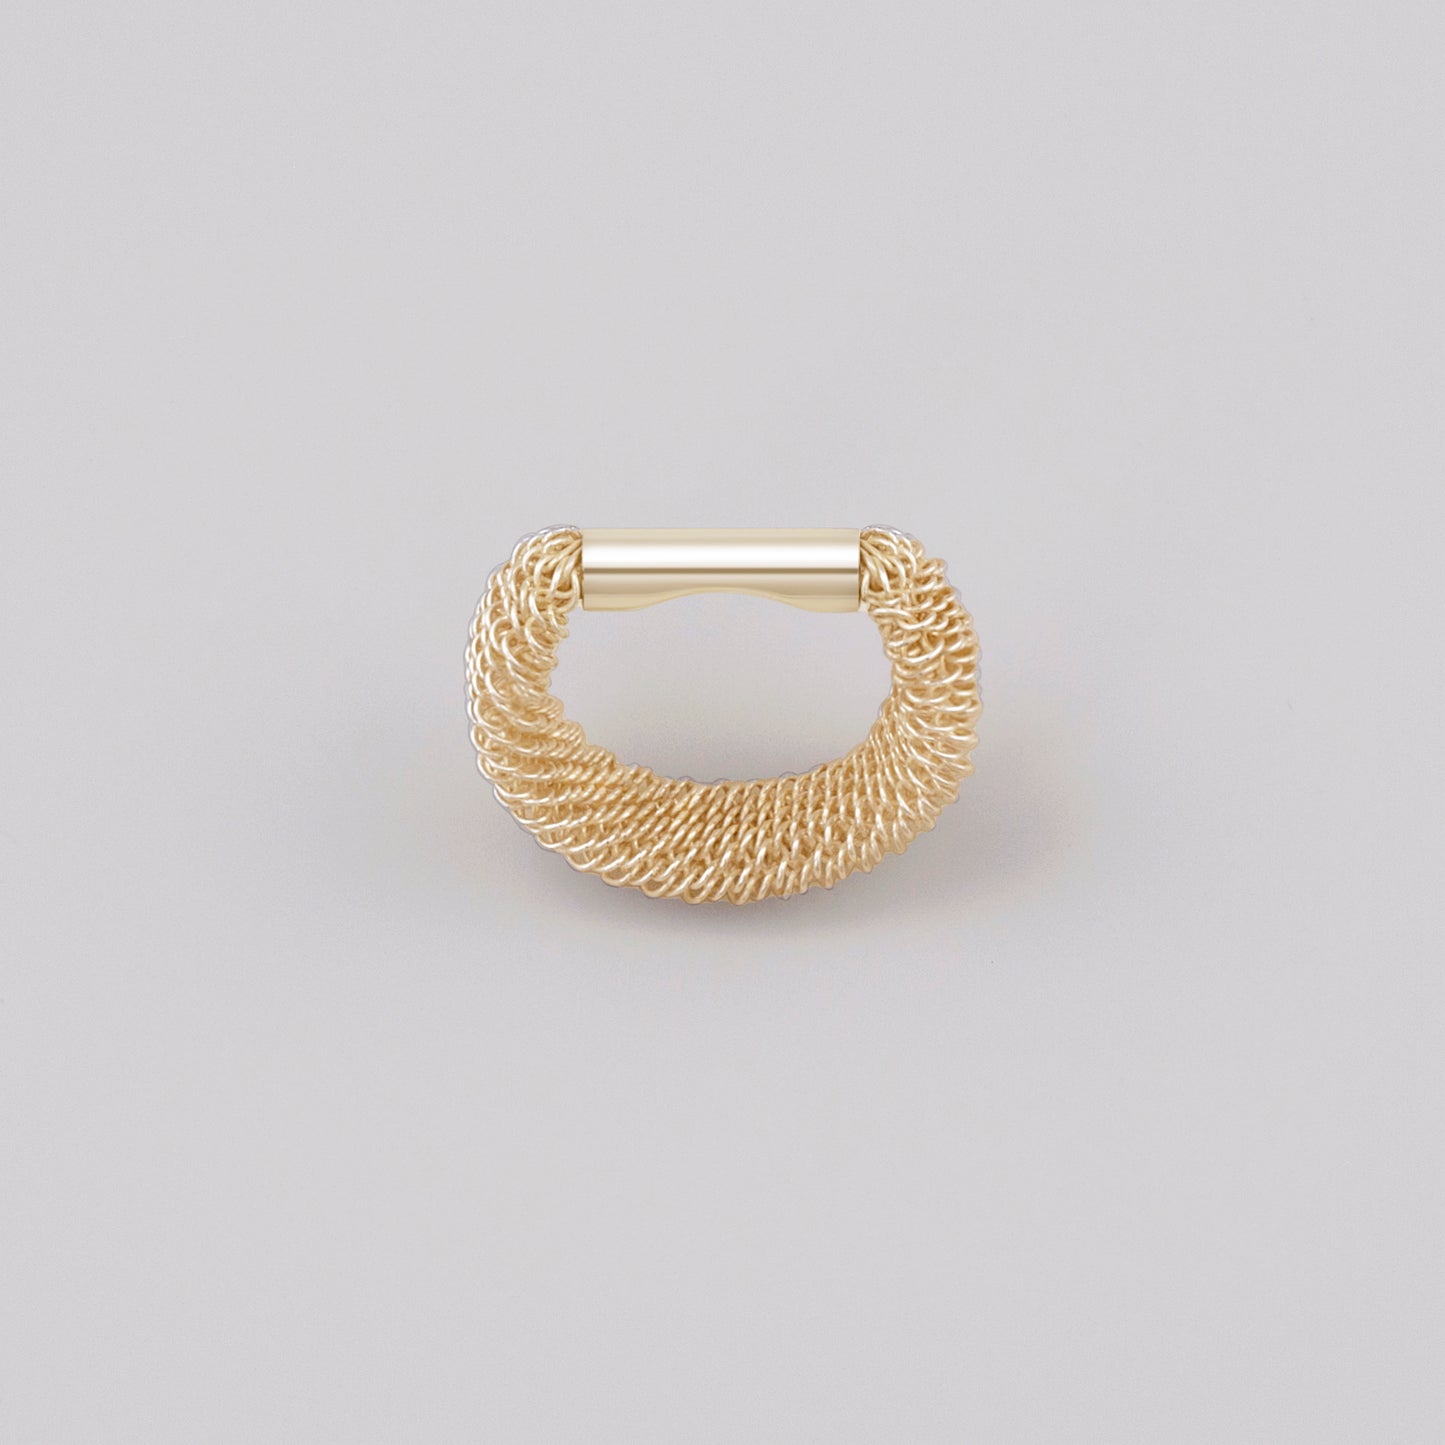 8mm Filigree Shoelace Ring - GOLD